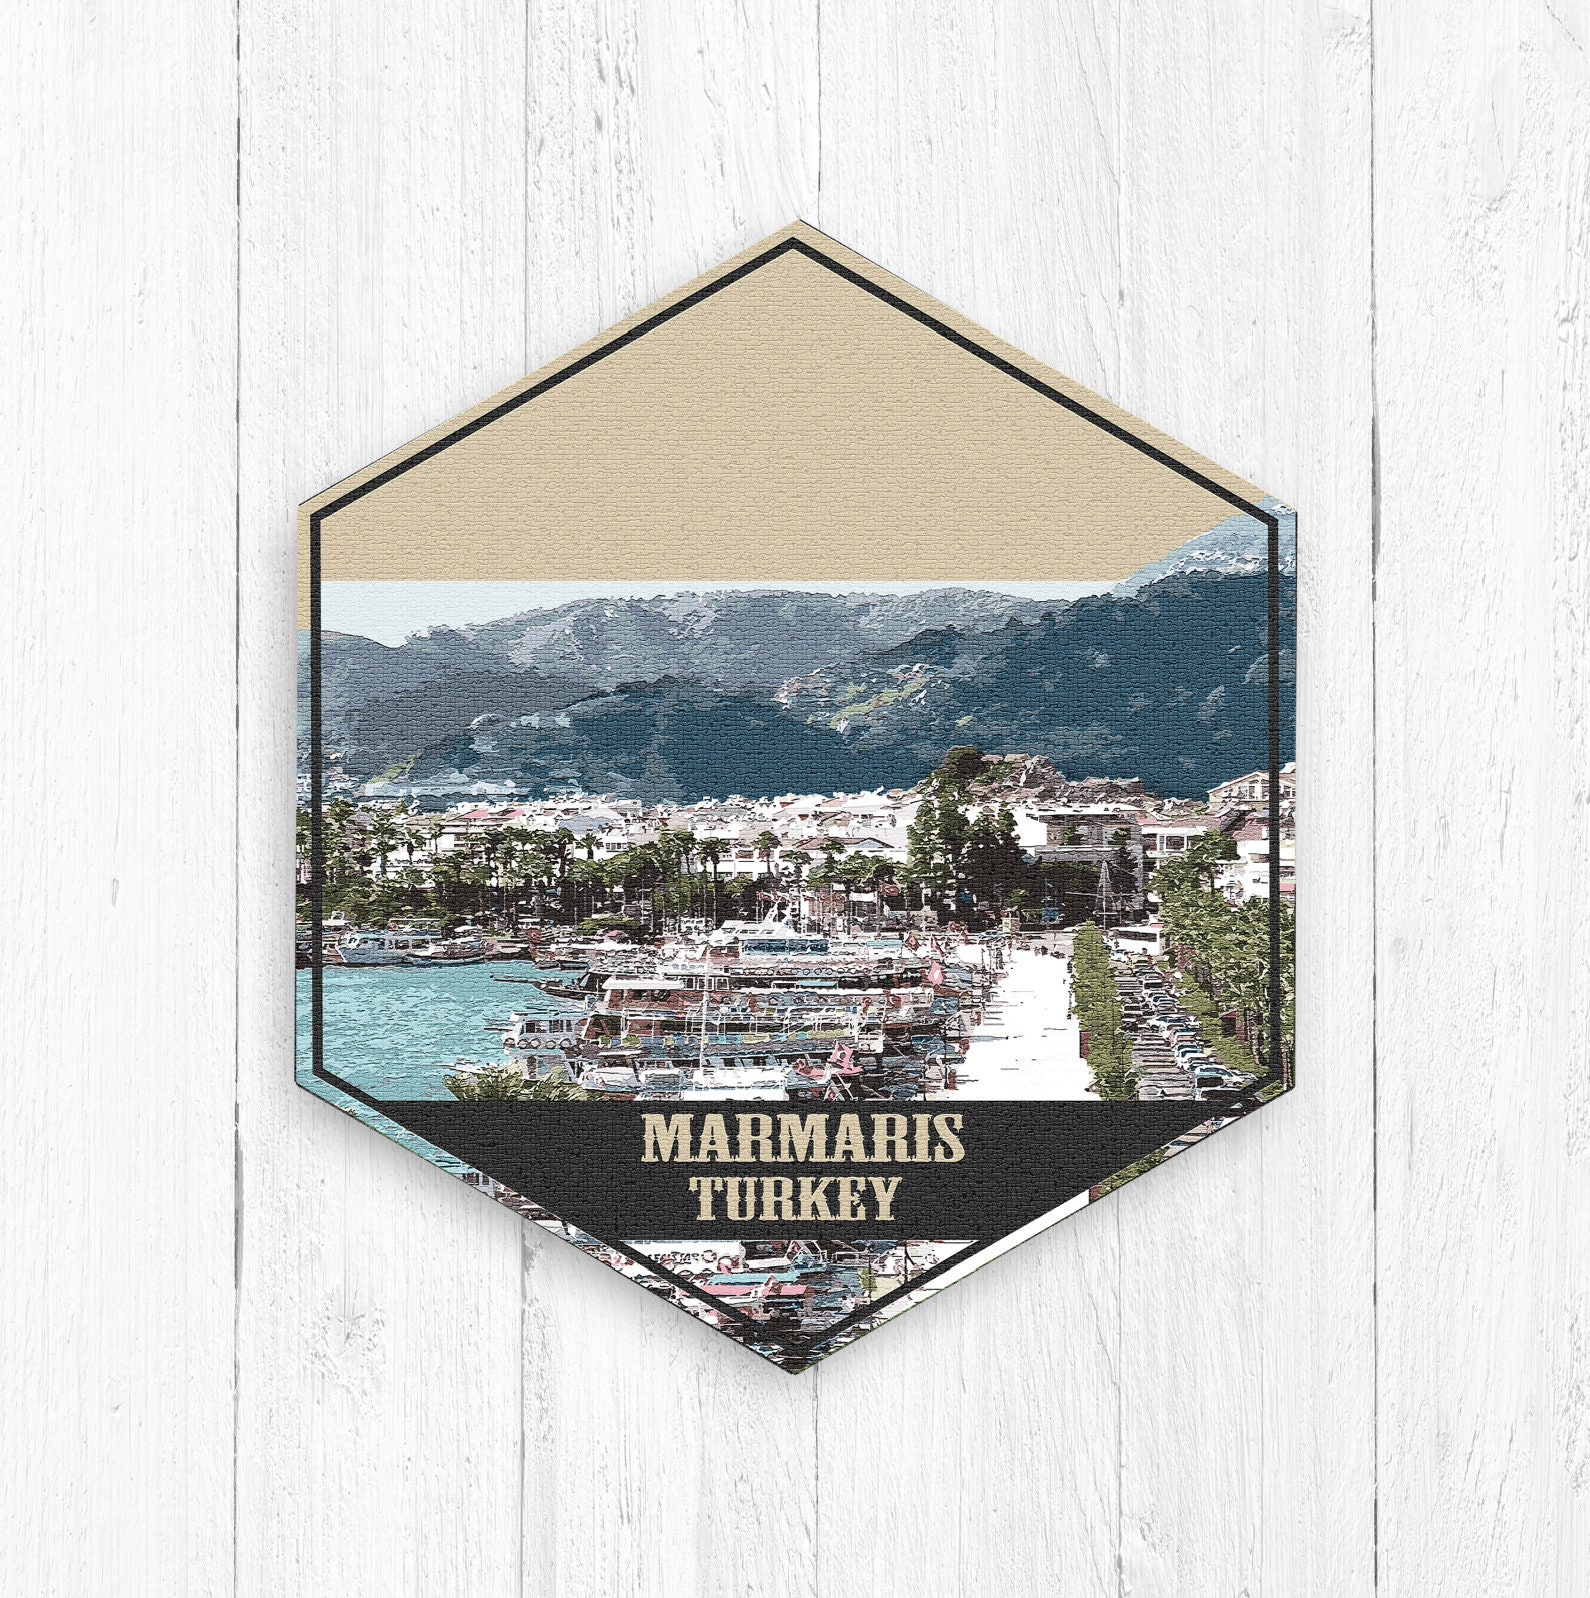 Marmaris Turkey Hexagon Print by Printed Marketplace 